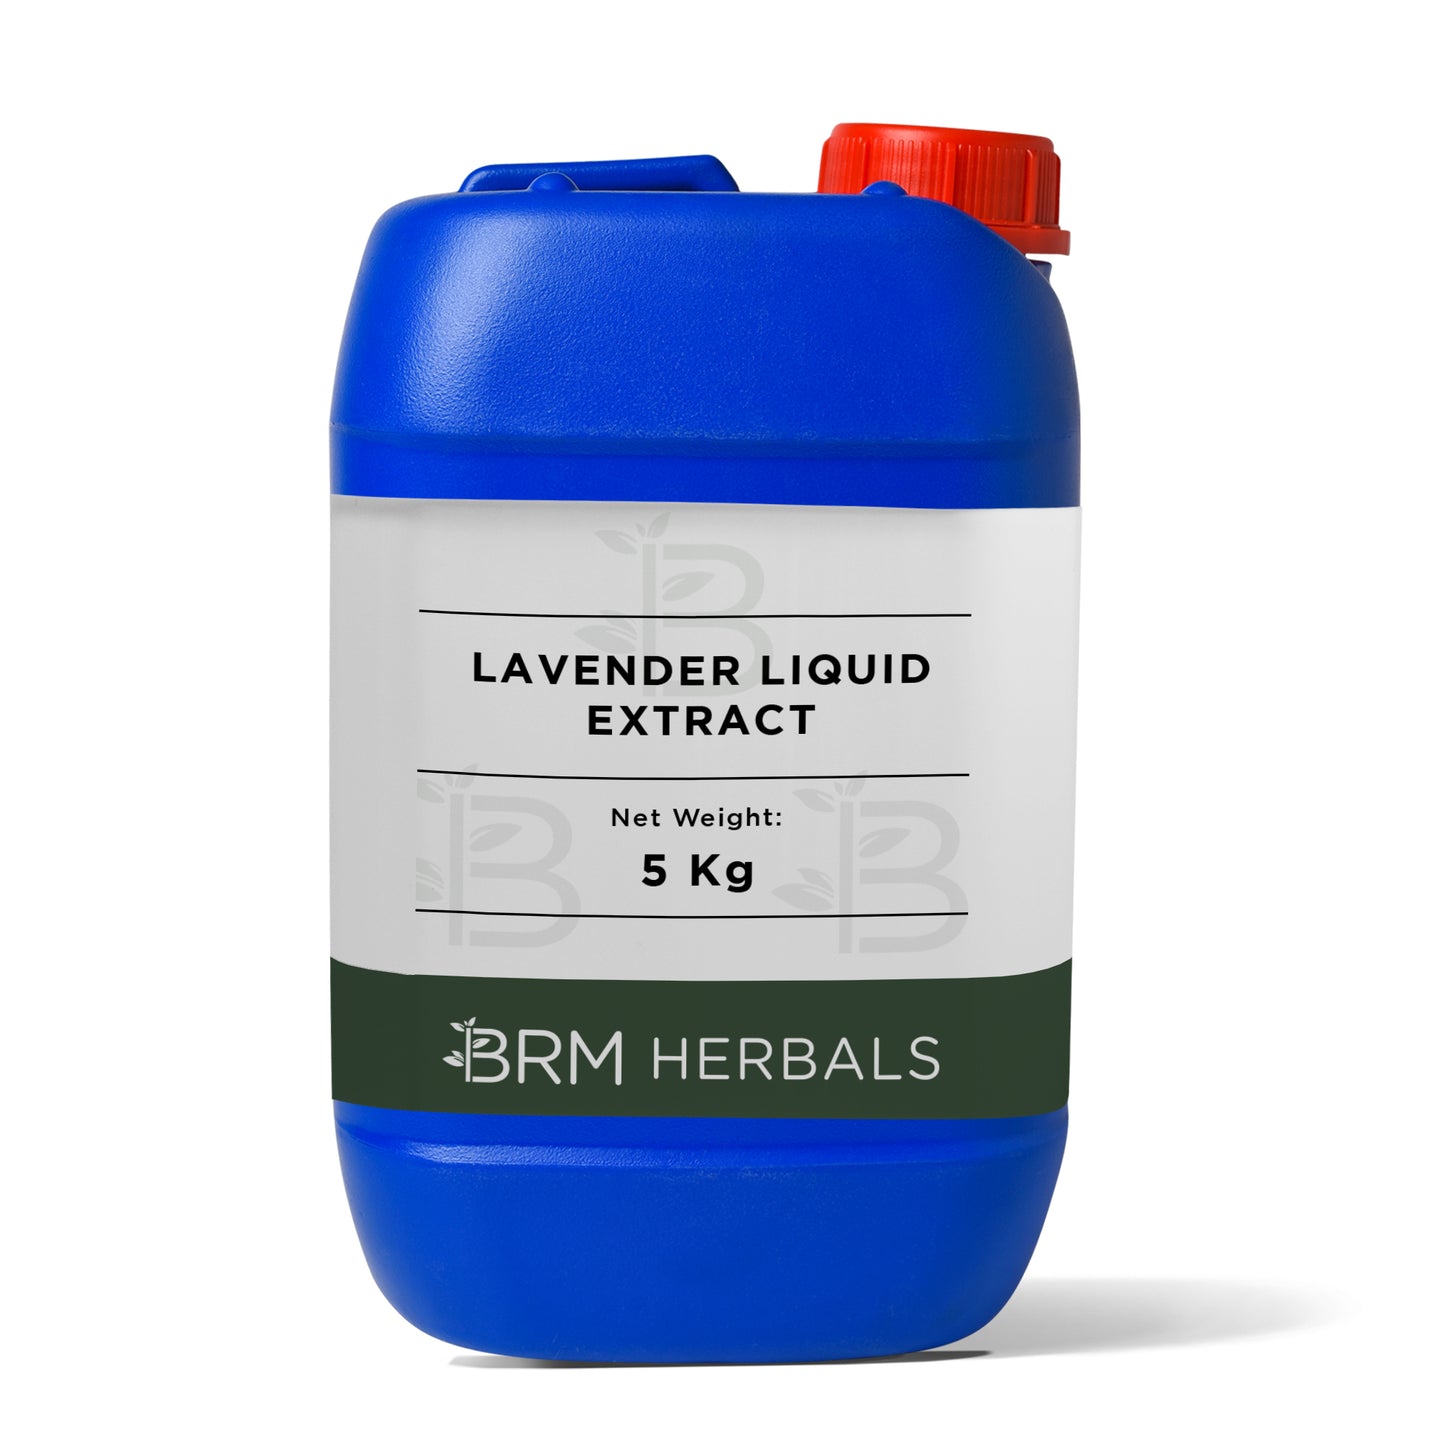 Lavender Liquid Extract